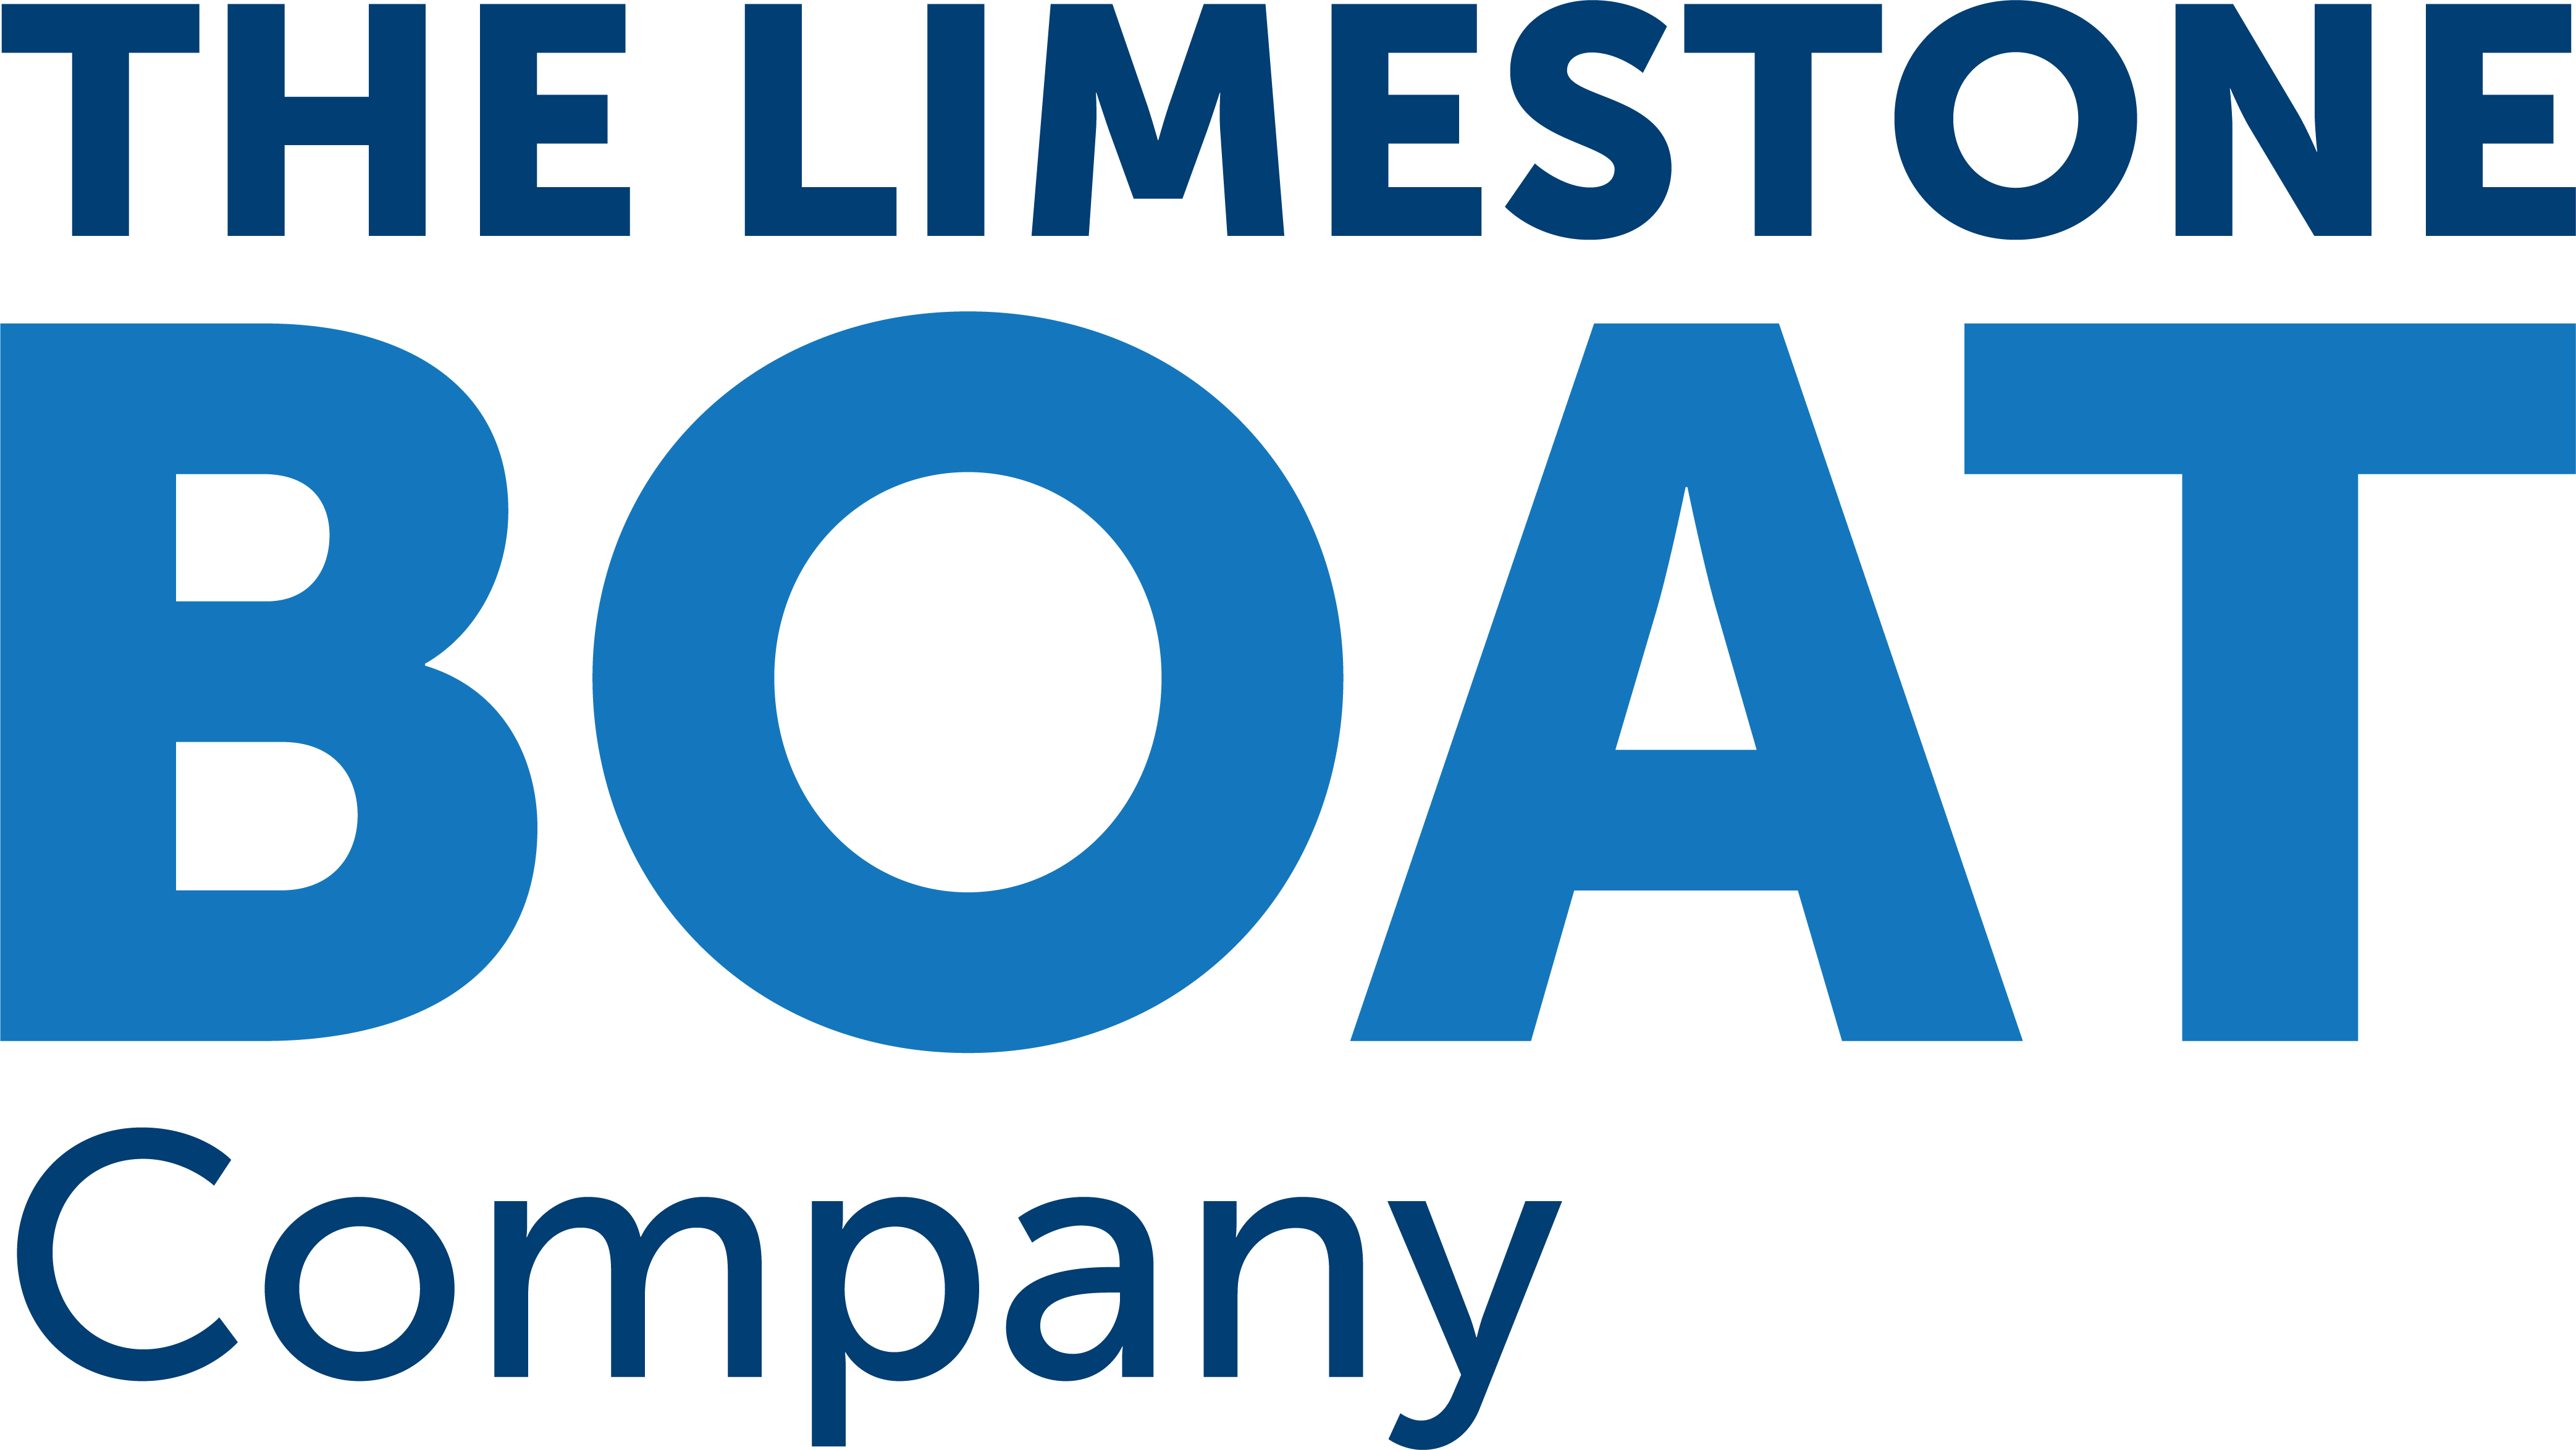 LIM-0521-045-The Limestone Boat Co brand-CHOSEN.png